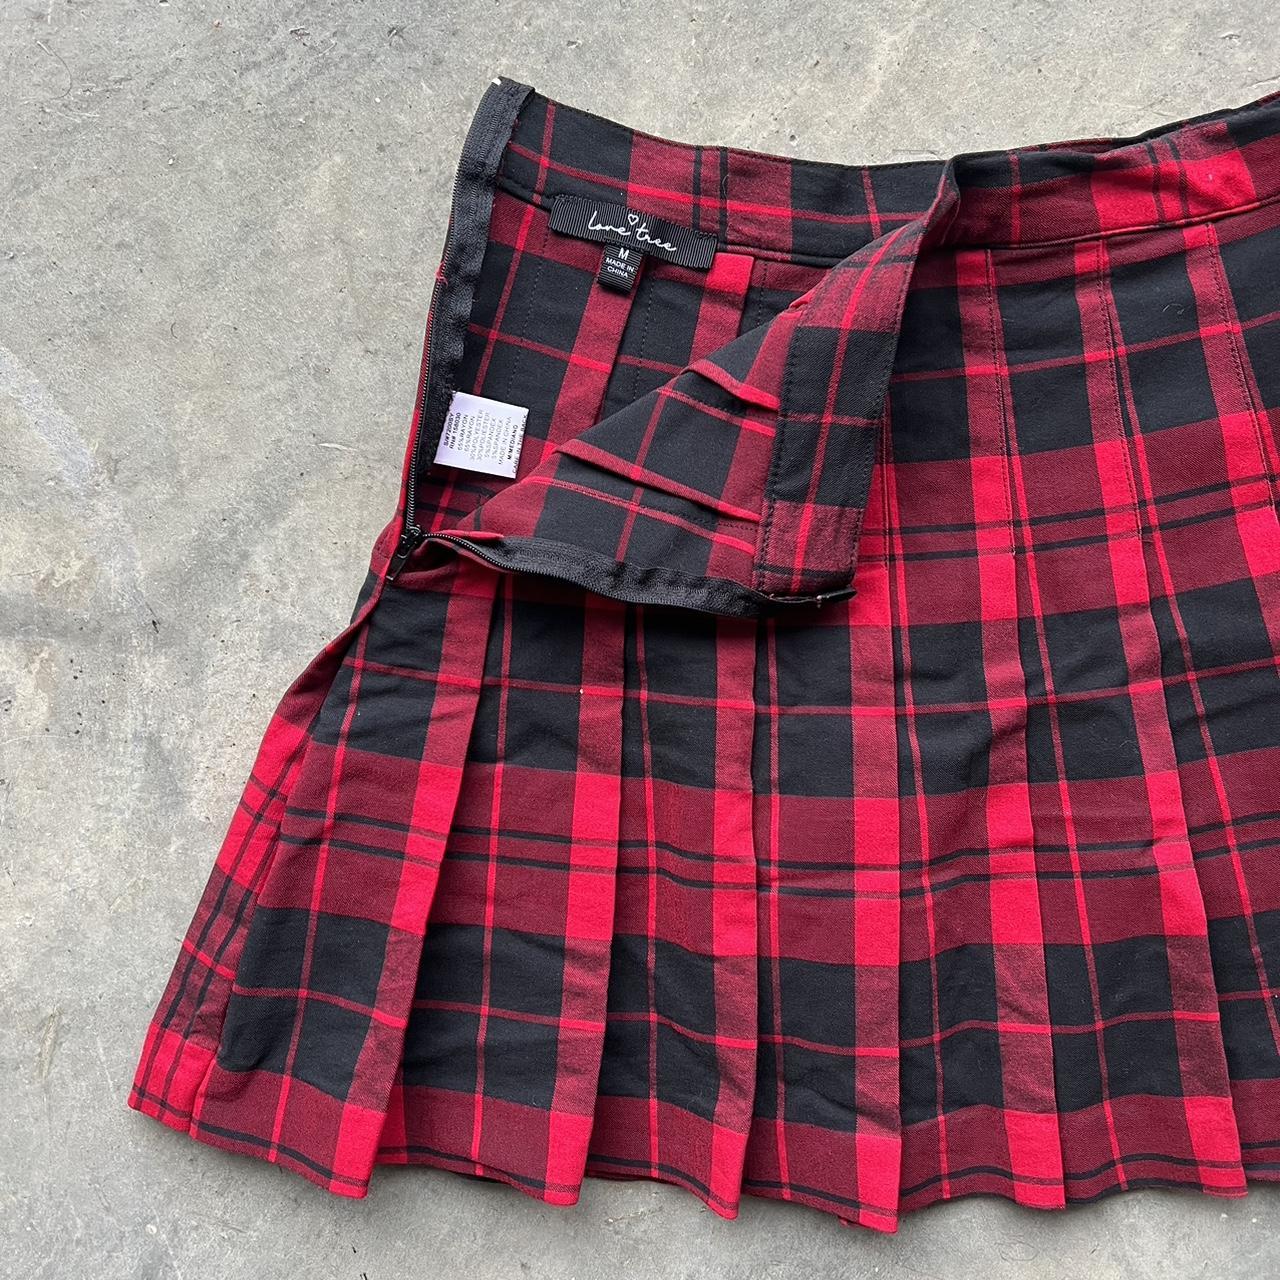 Women's Black and Red Skirt | Depop